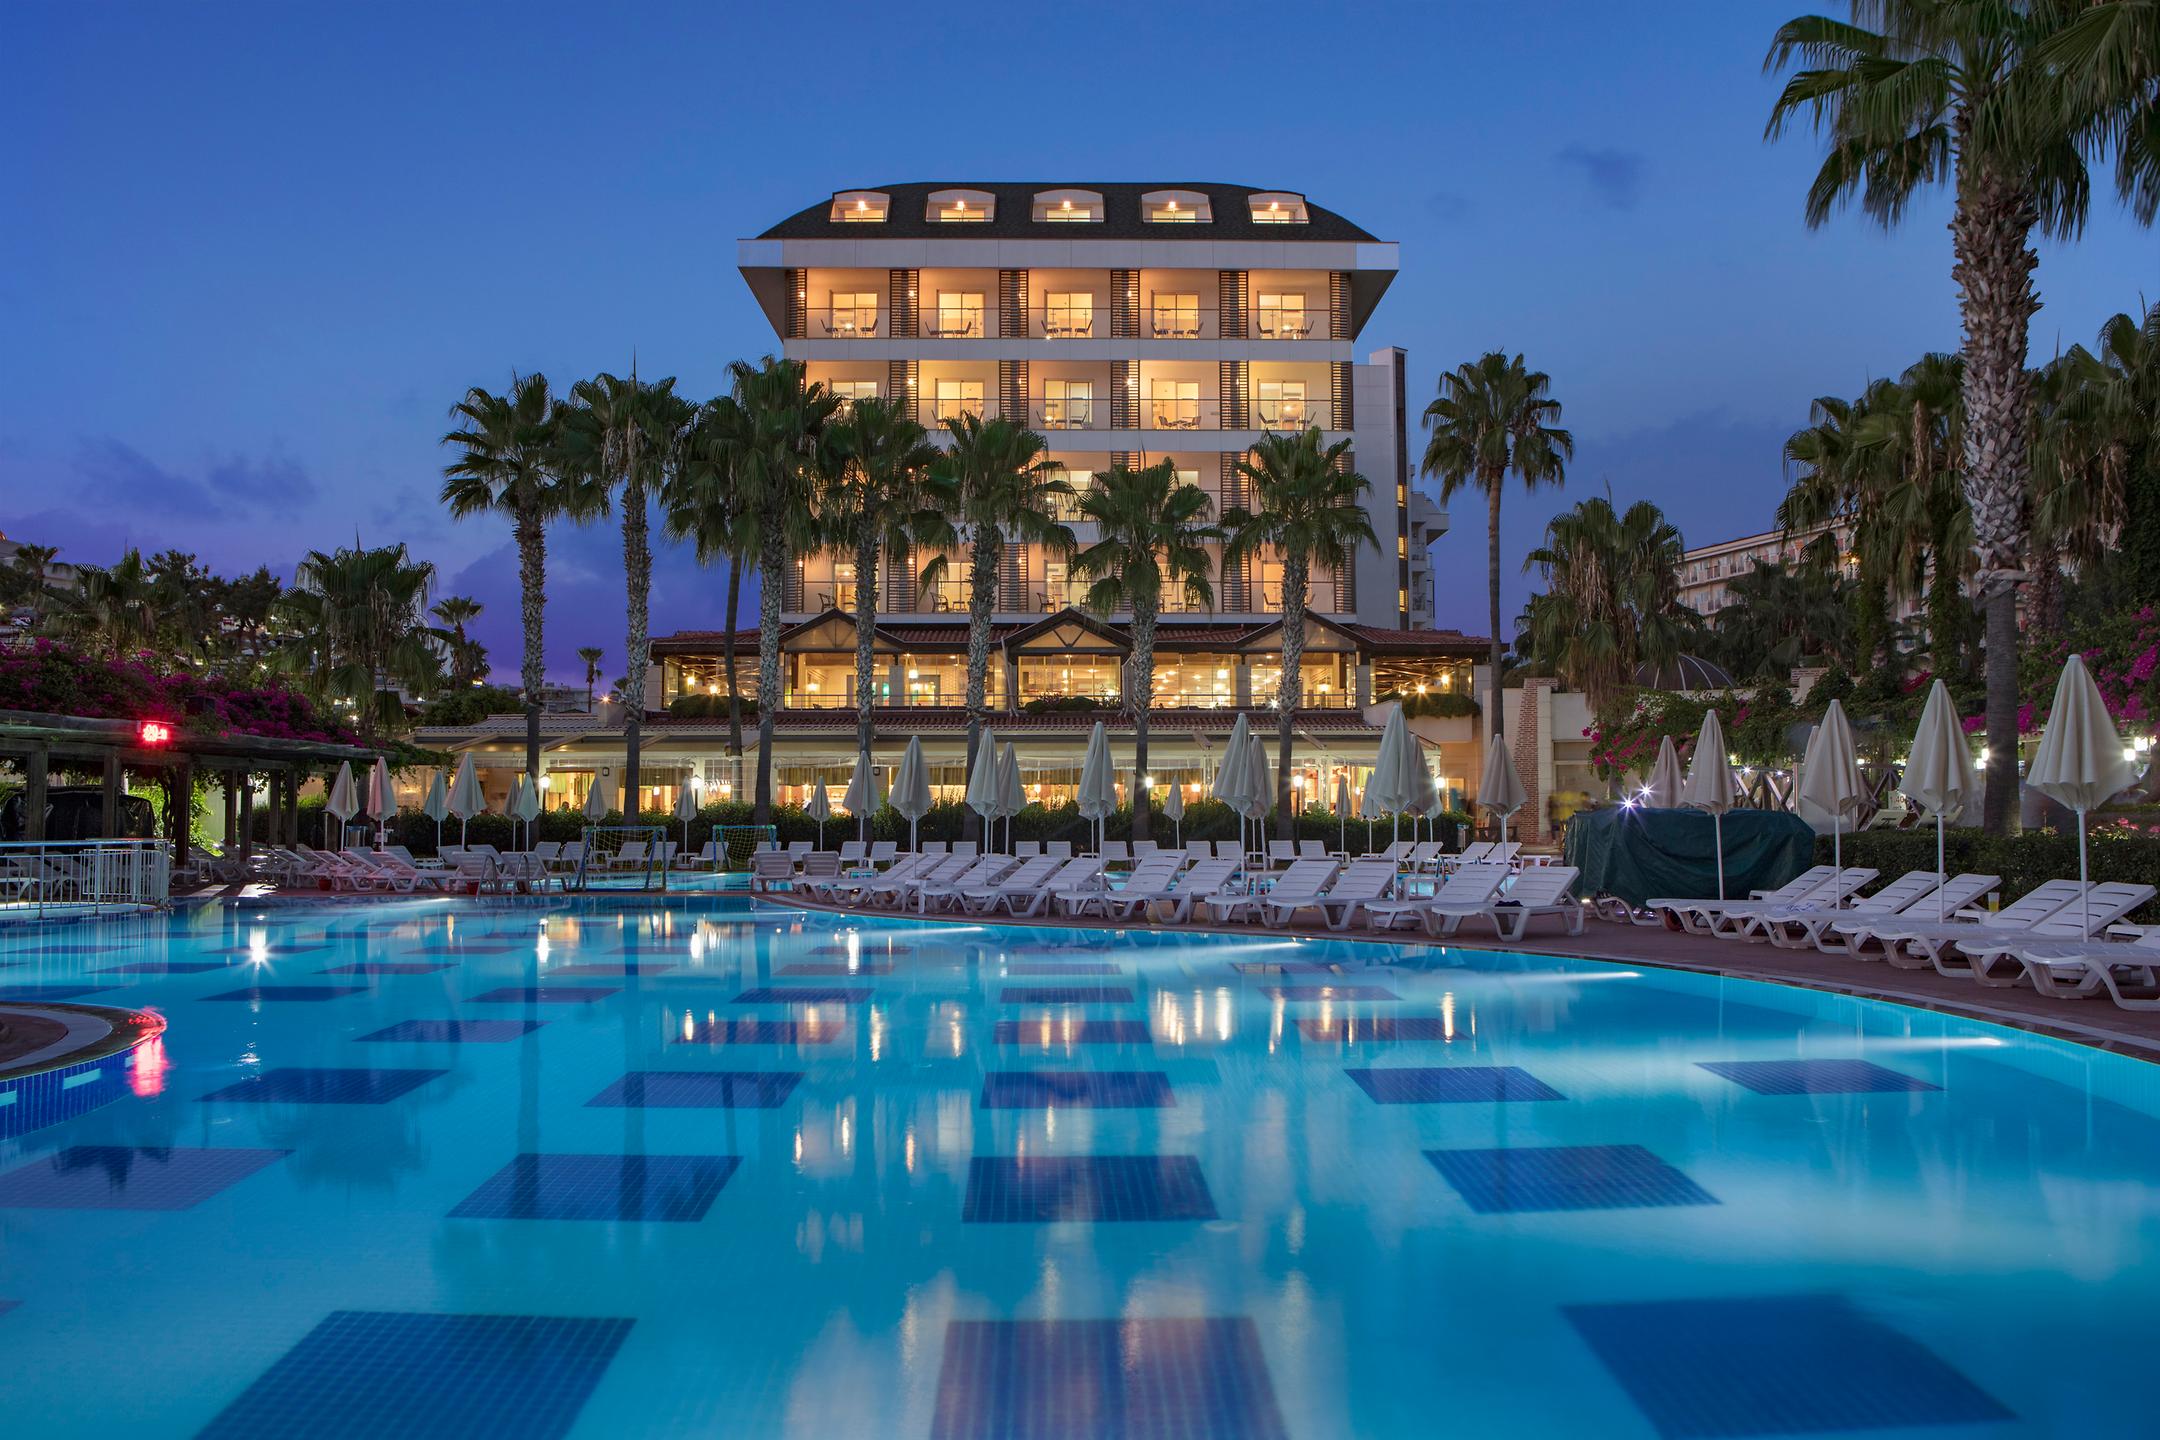 Trendy Hotels Palm Beach